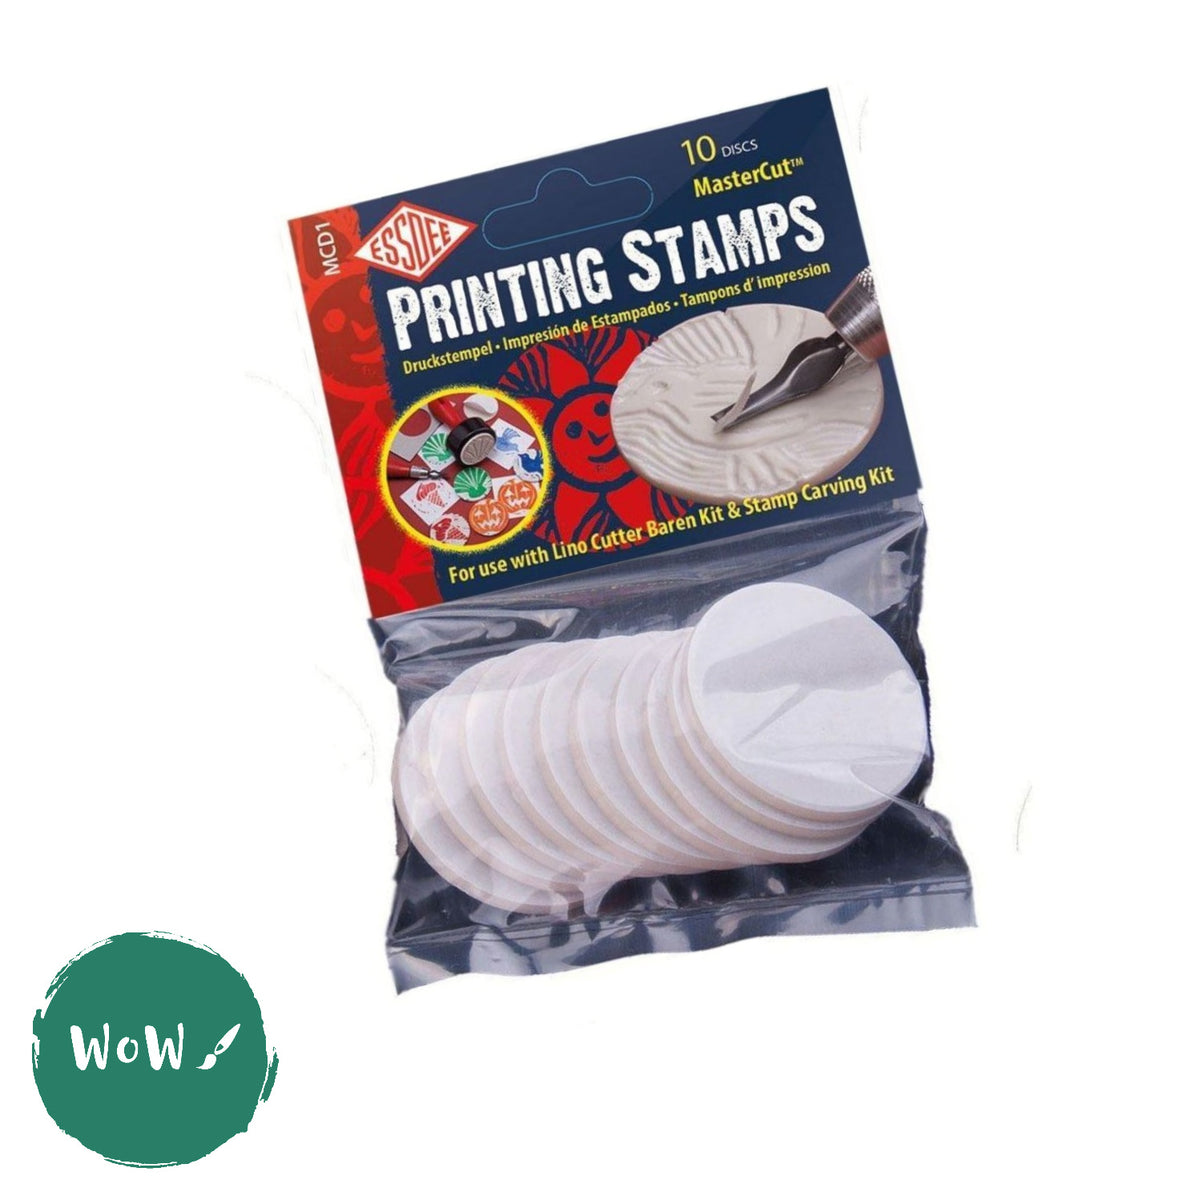 Lino Cutter & Stamp Carving Kit